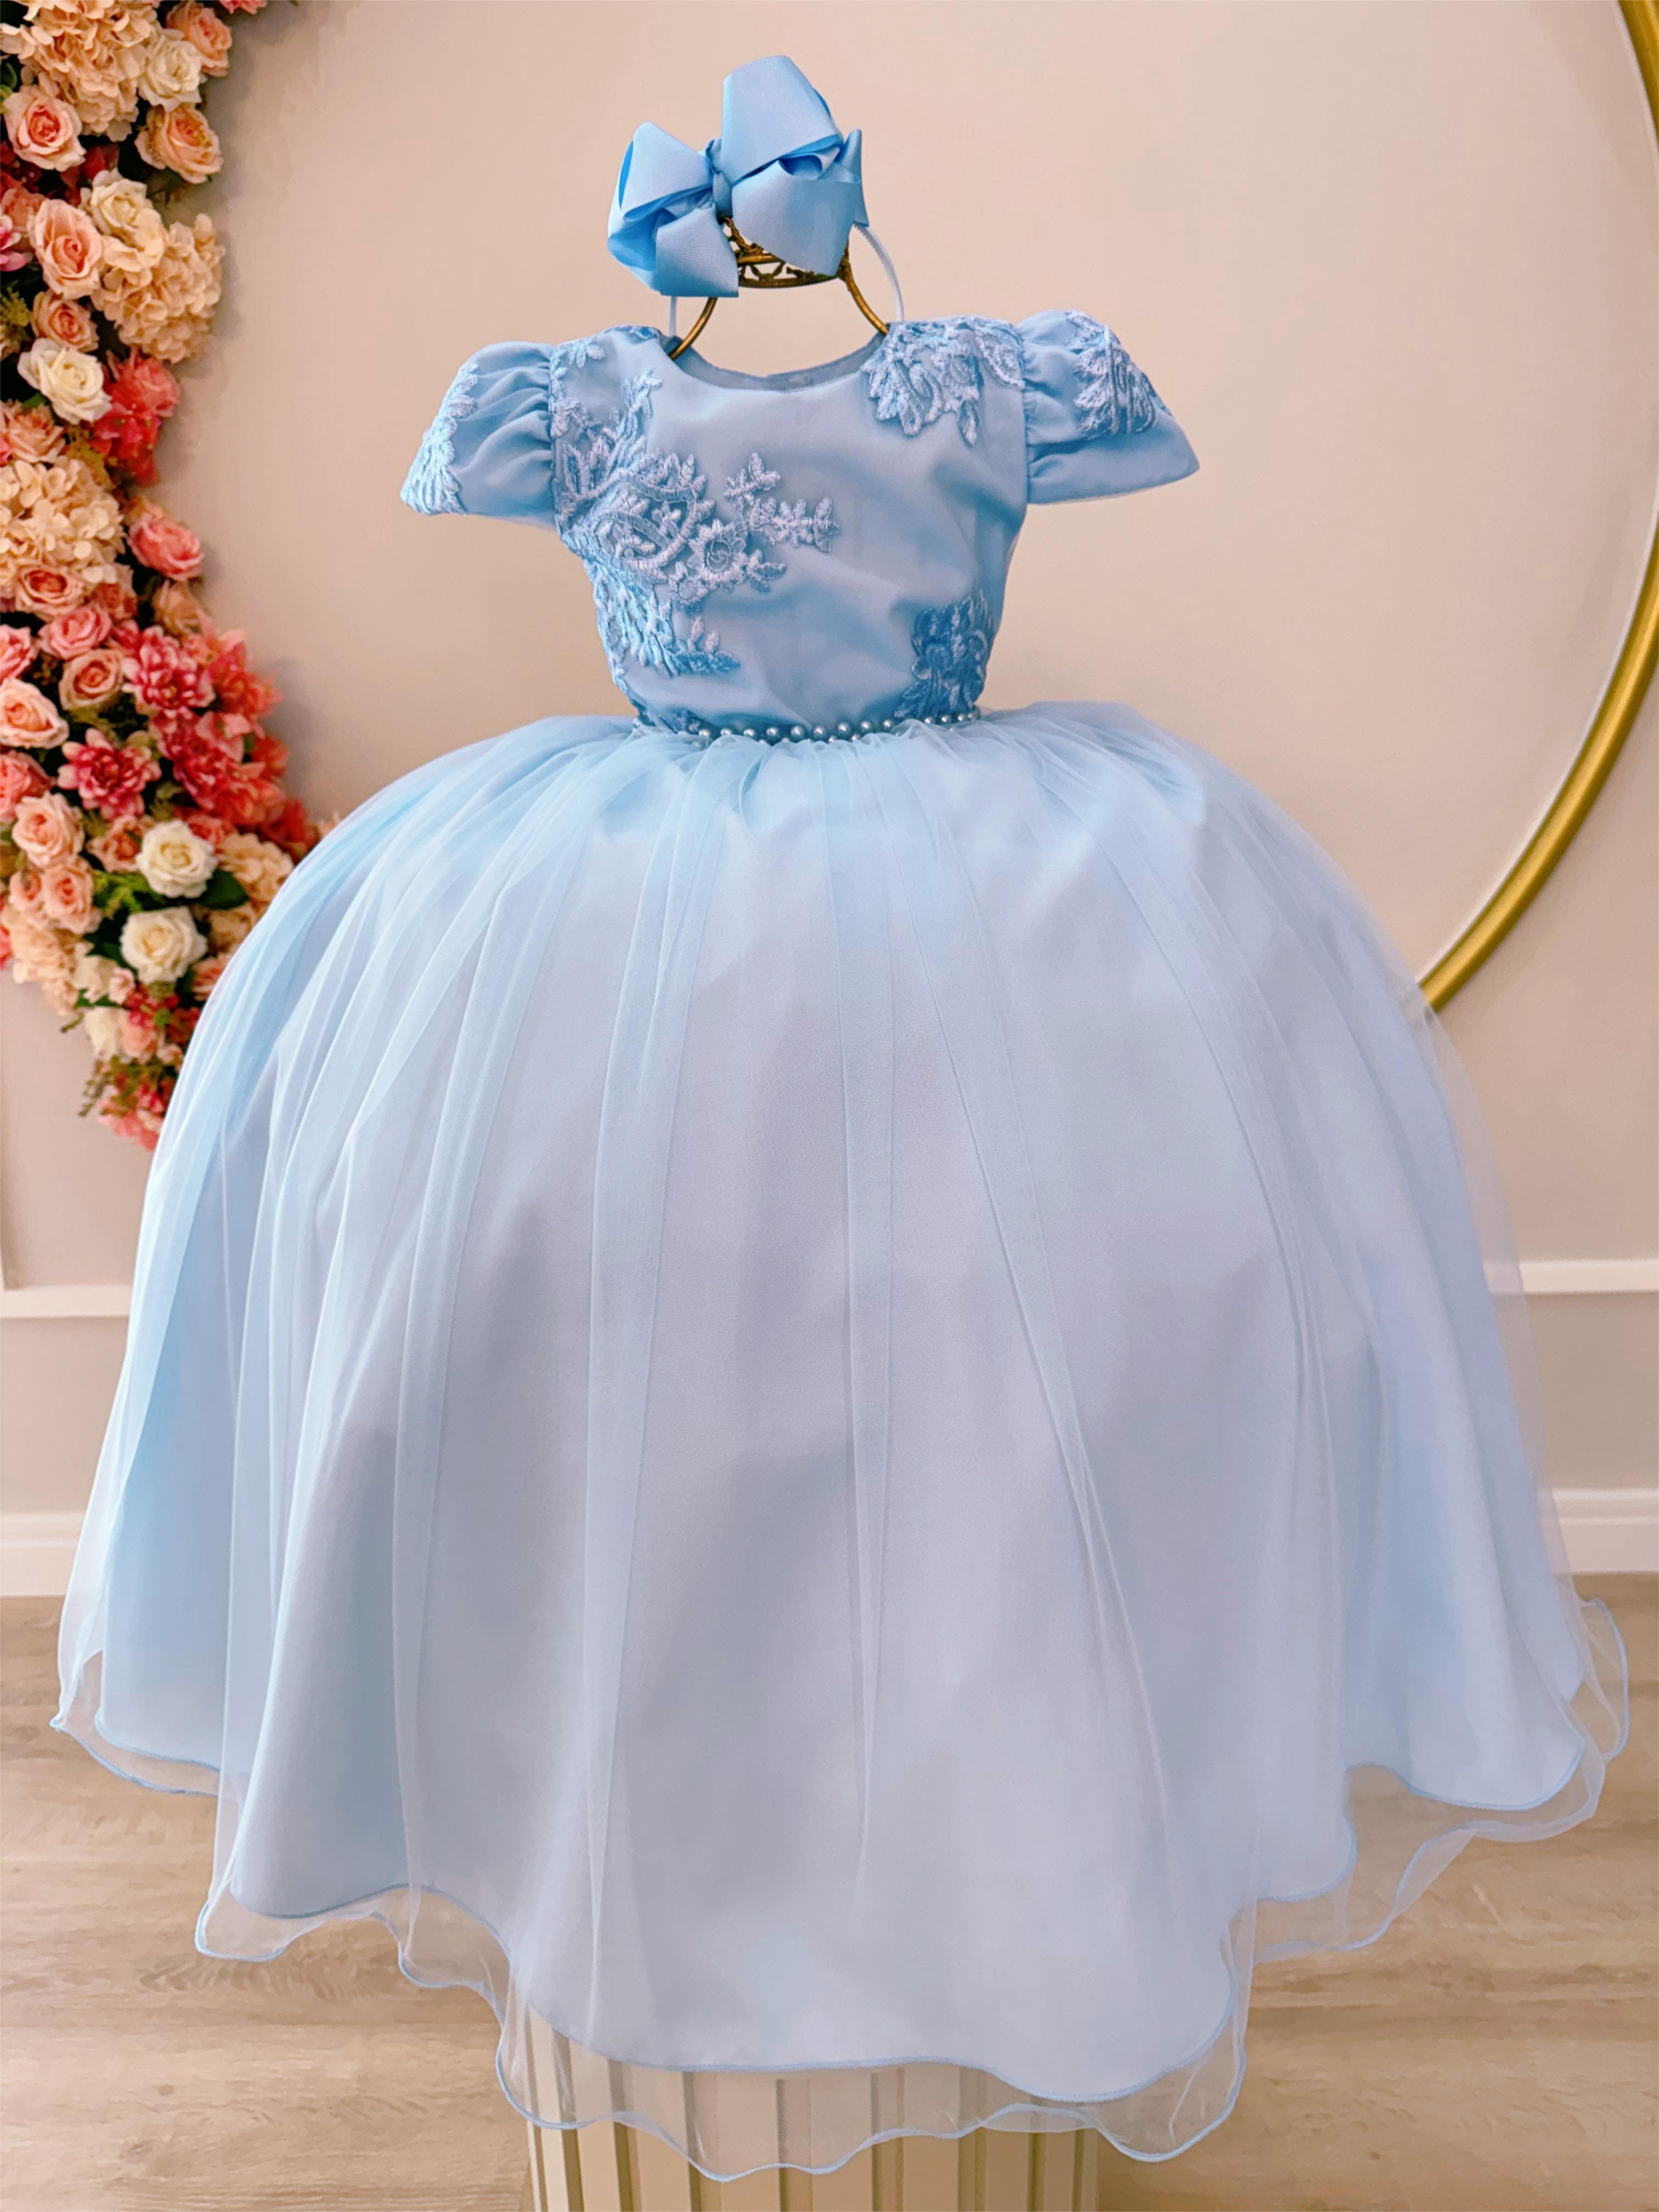 Vestido de Festa Infantil Azul Detalhe Renda Luxo